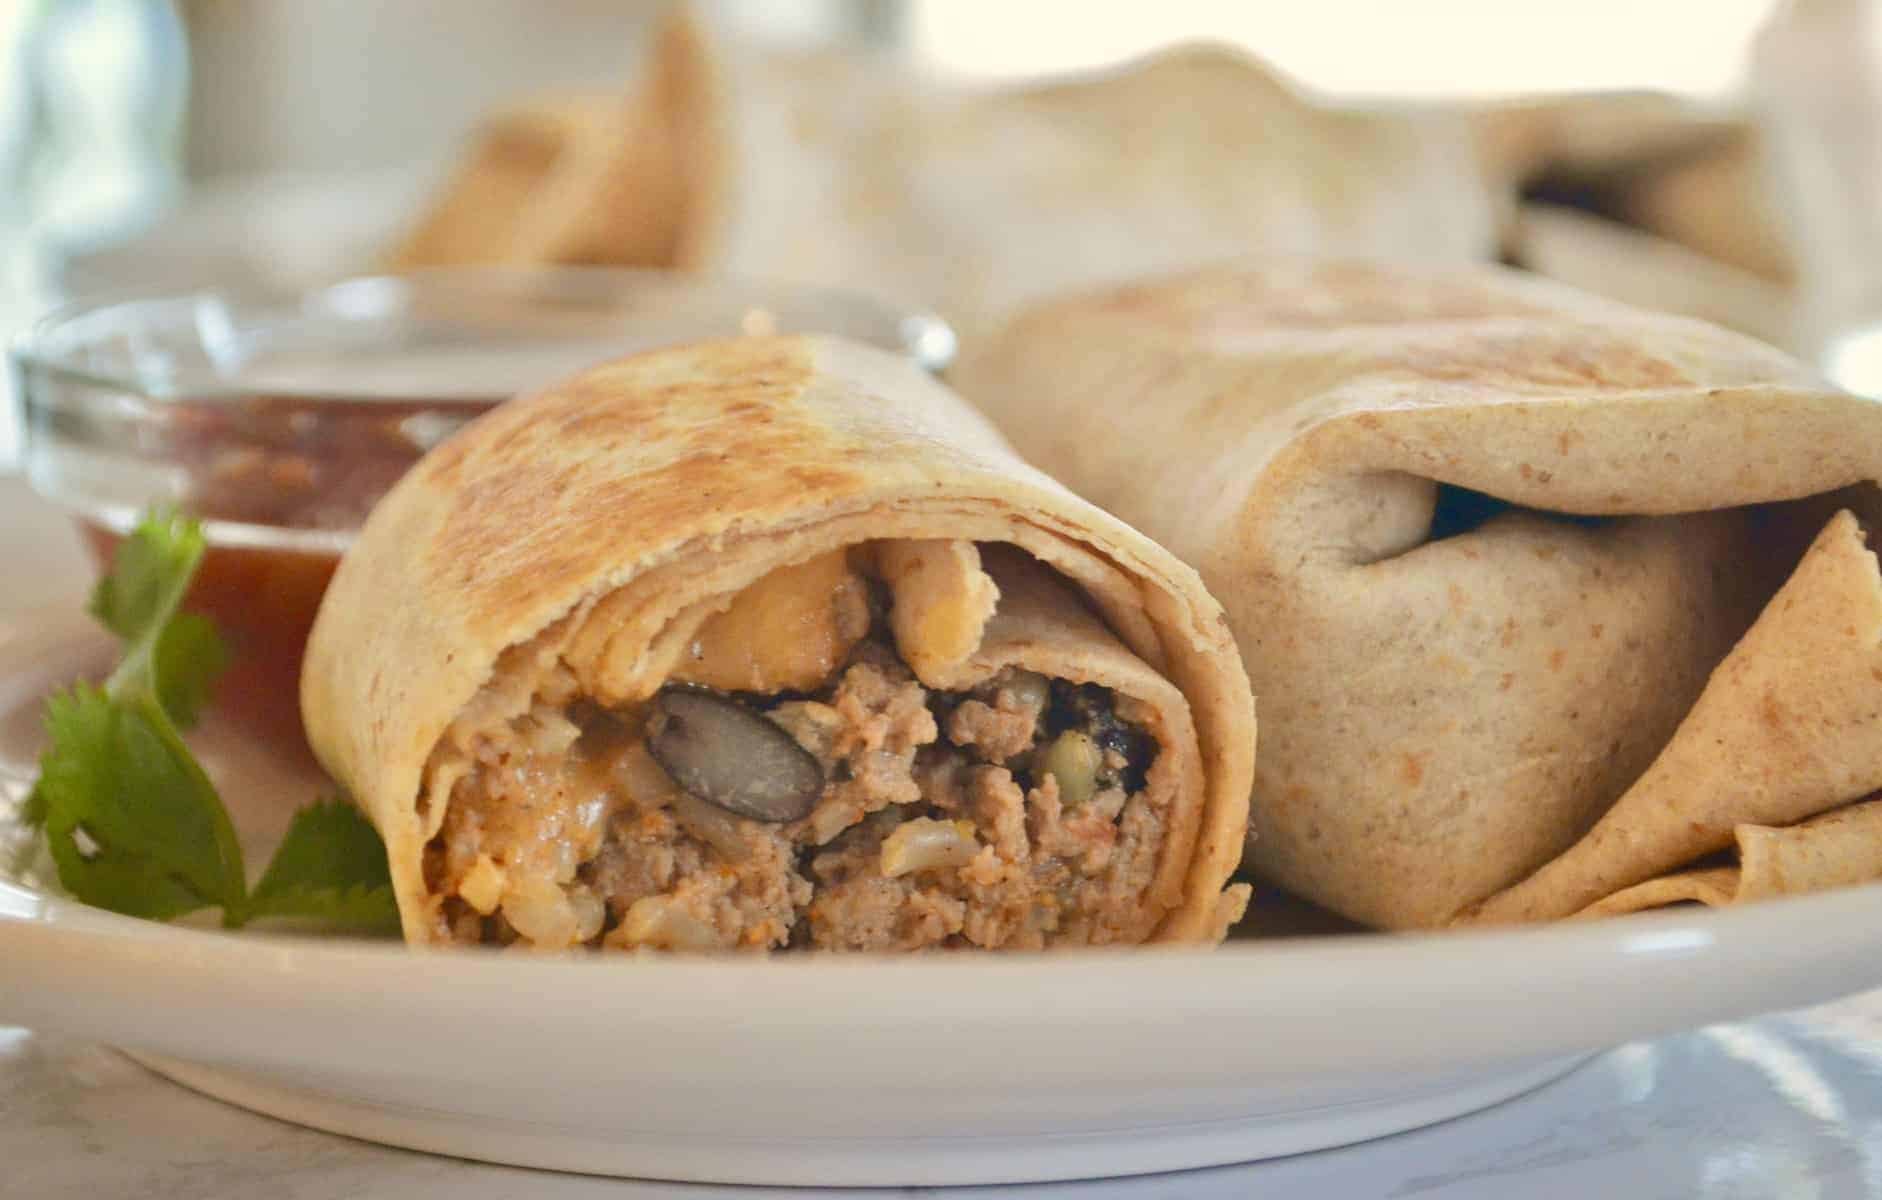 Freezer Burritos Ground Turkey and Black Beans - This Delicious House